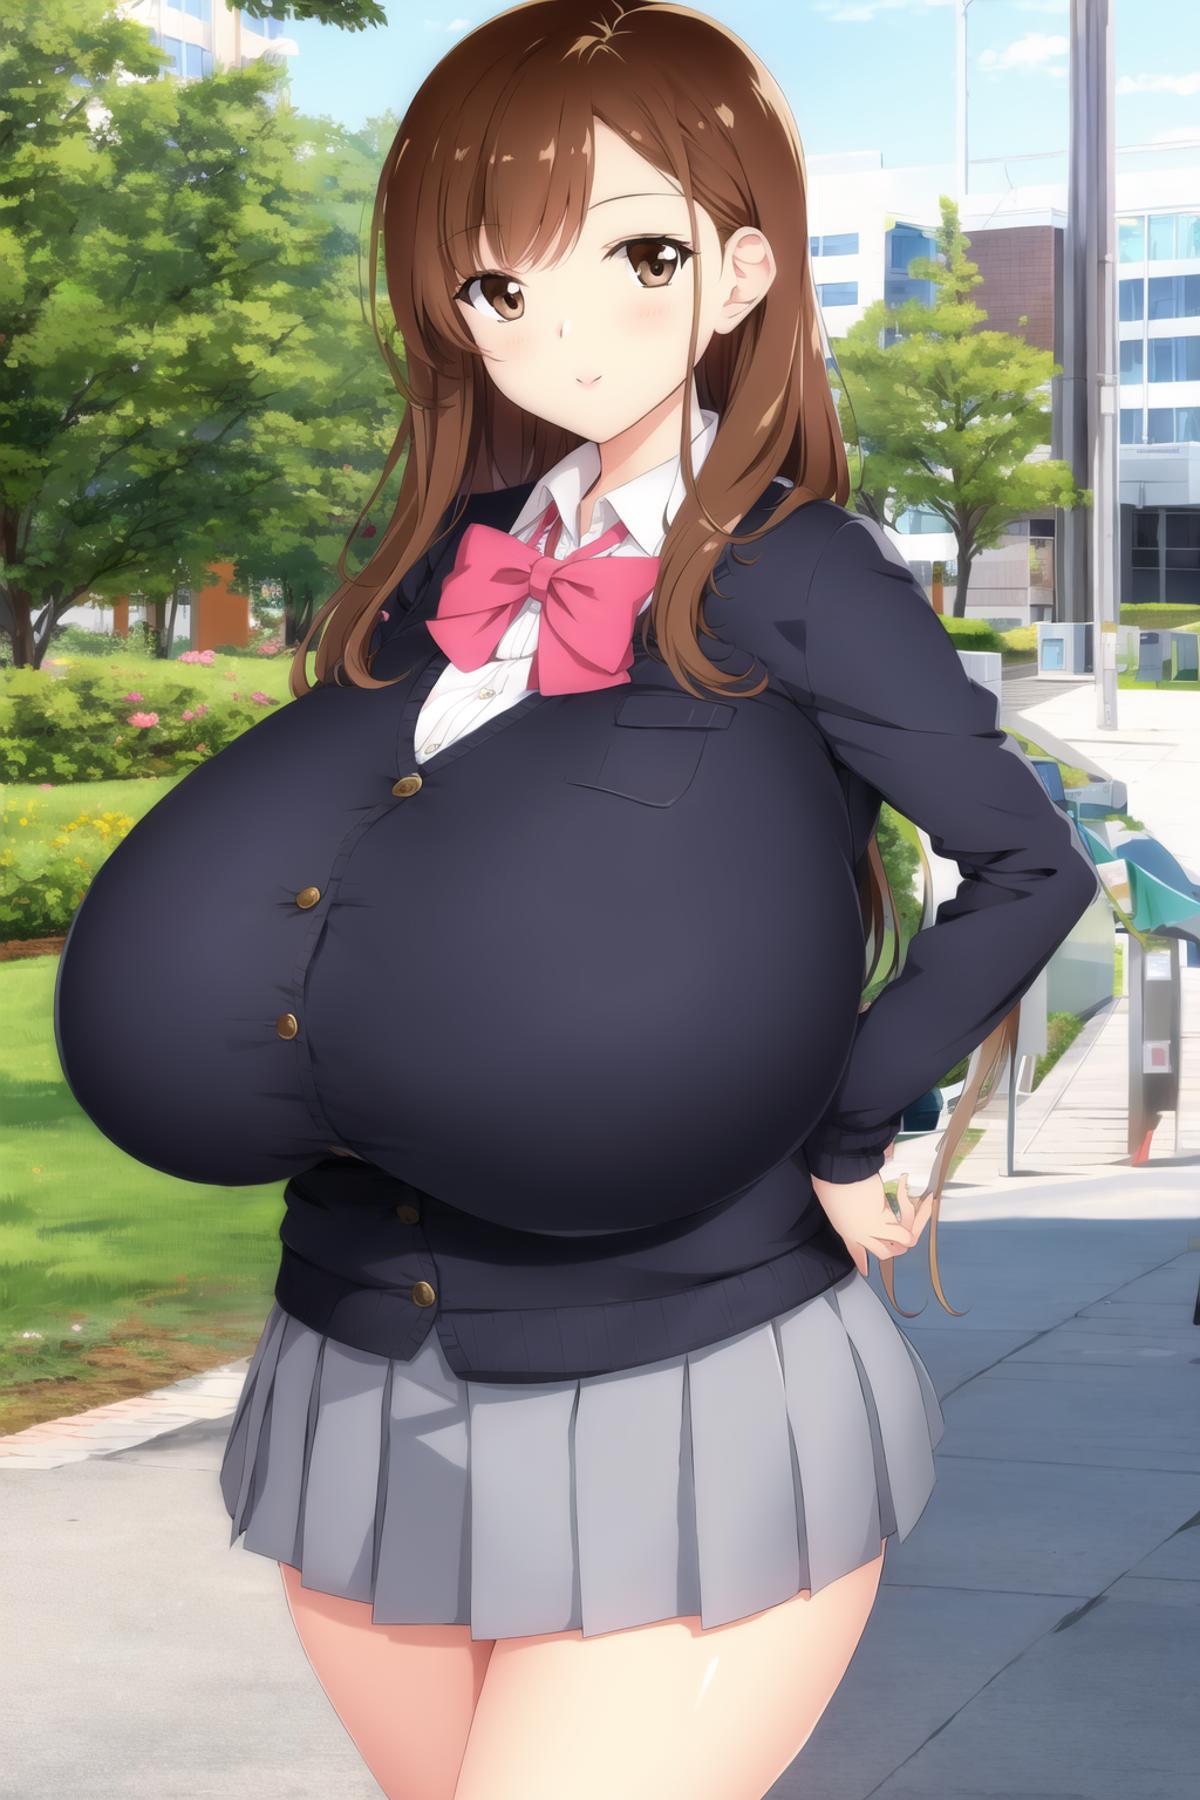 Gigantic anime breast